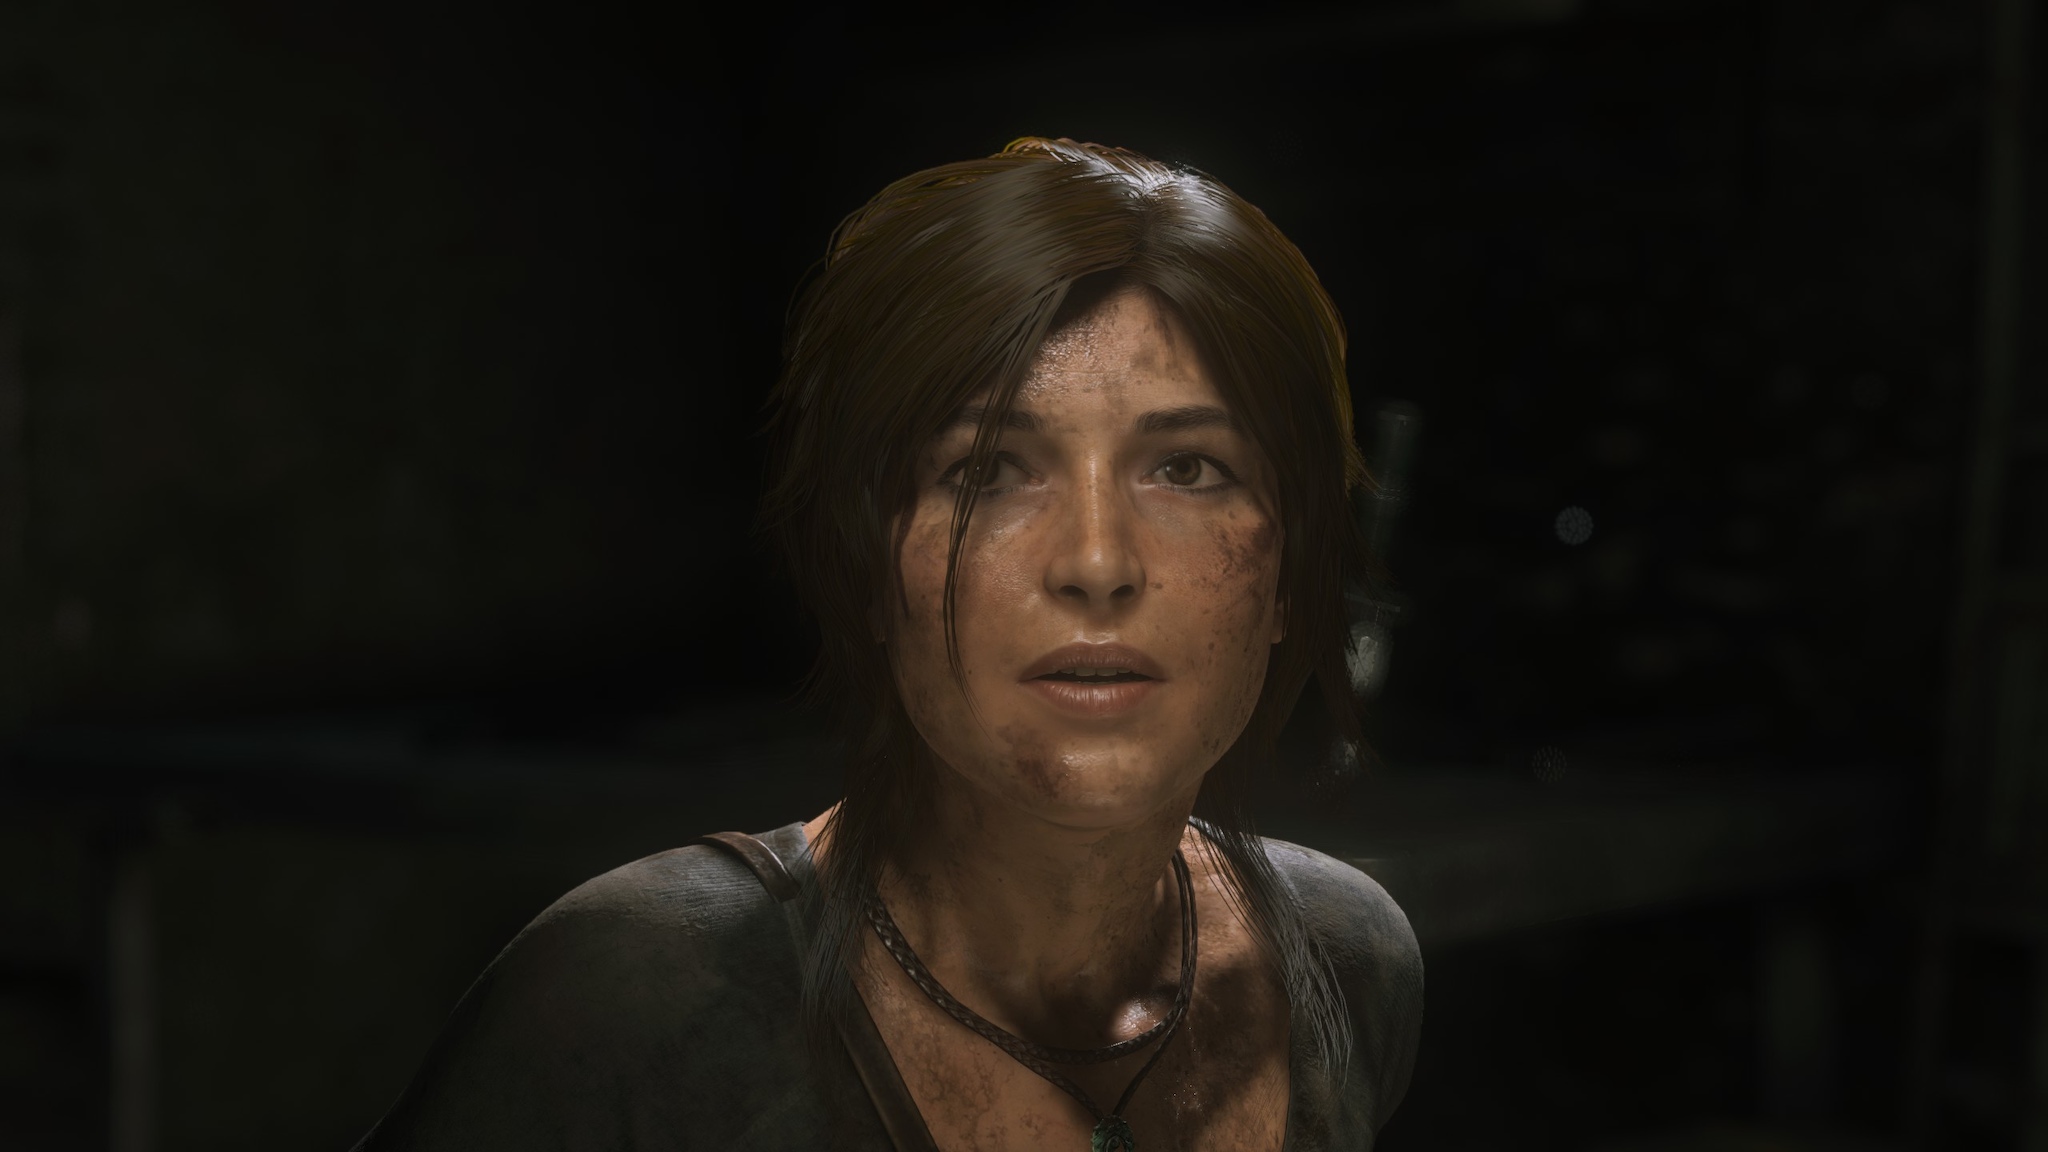 video games, Tomb Raider Wallpaper